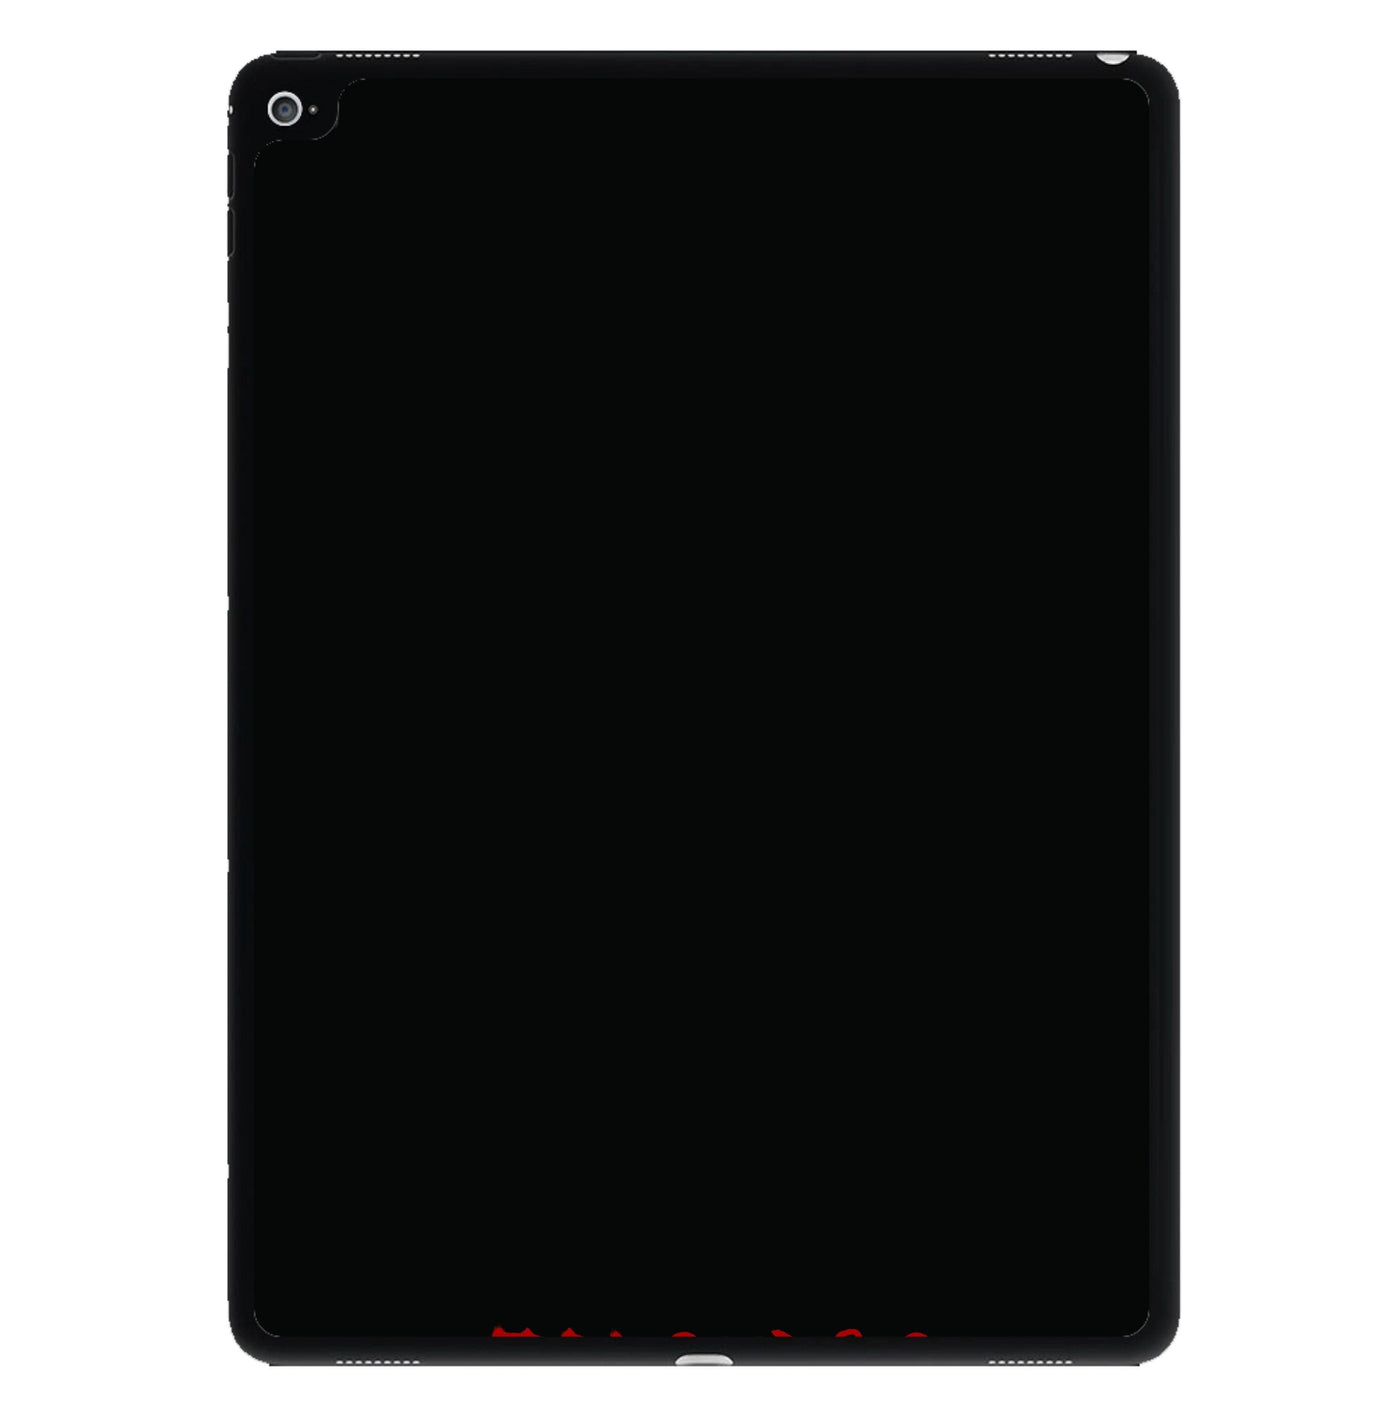 Feel Good Inc - Gorillaz iPad Case